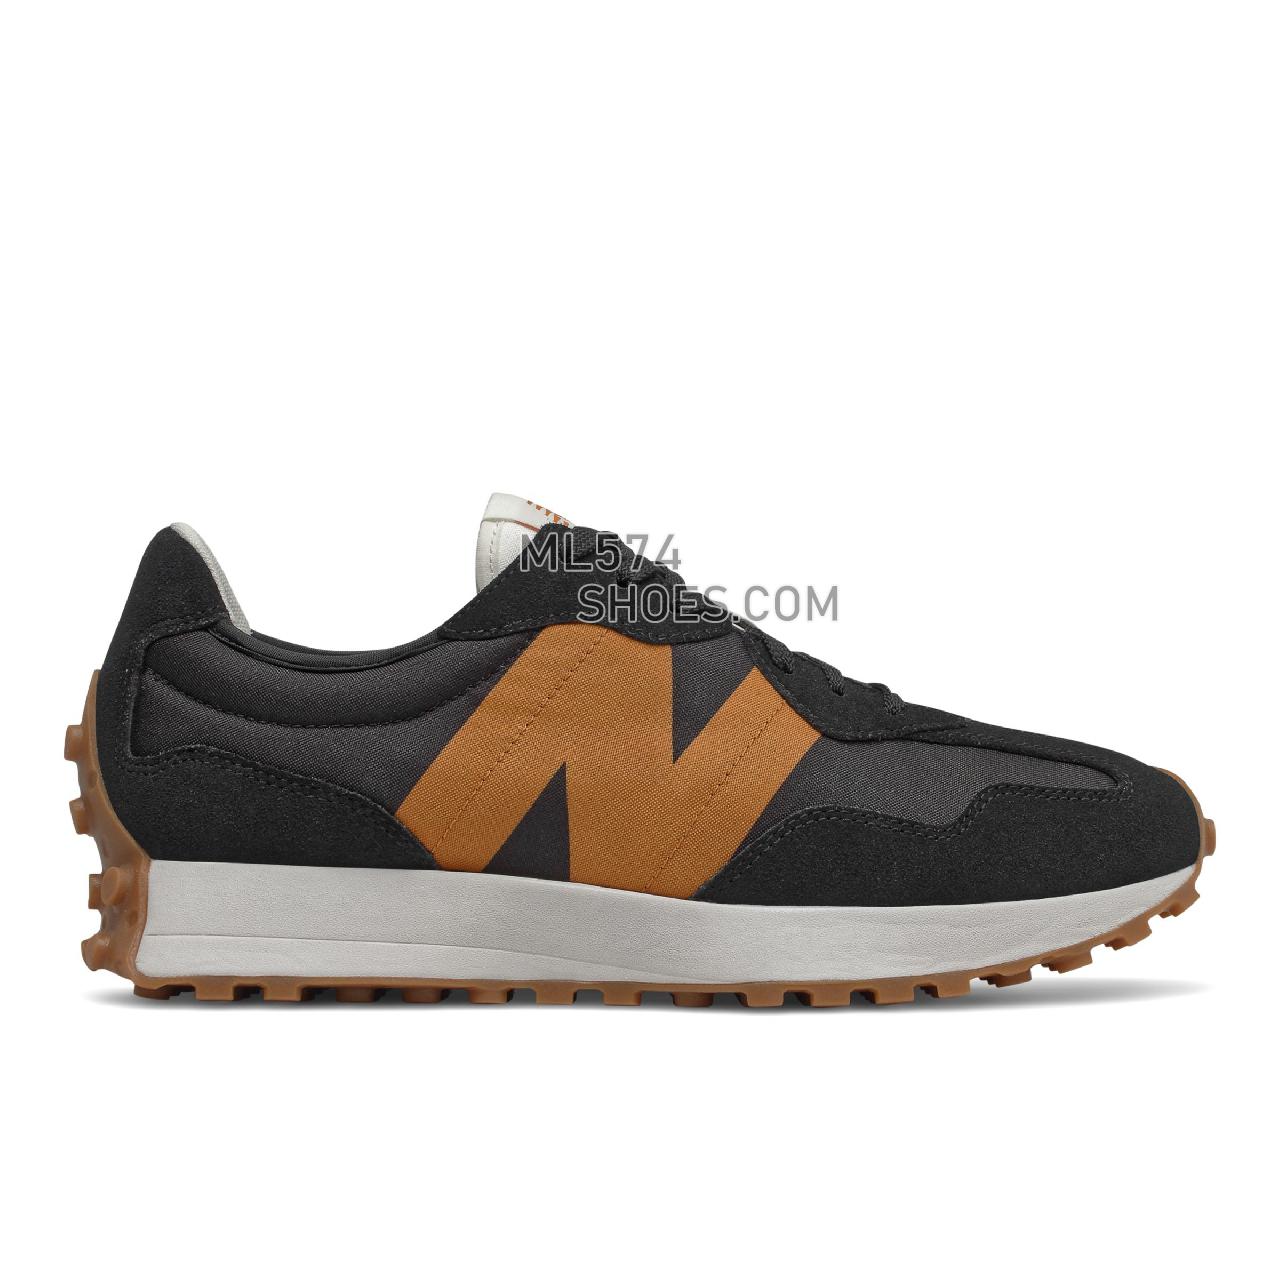 New Balance 327 - Men's Sport Style Sneakers - Black with Madras Orange - MS327HN1